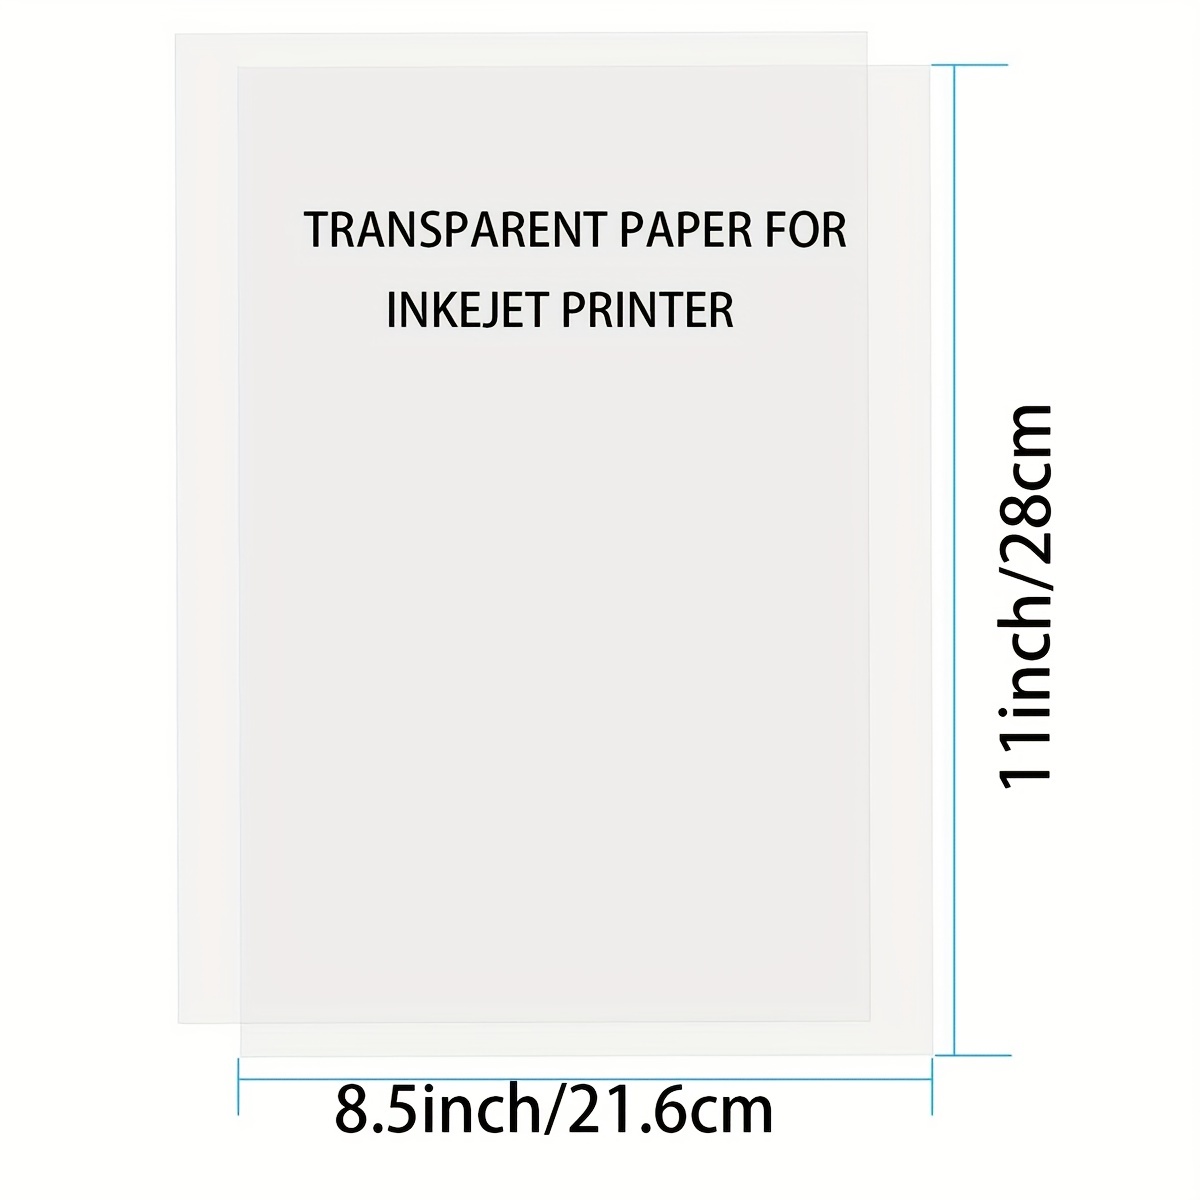 Printing on Transparency Film  Transparent paper, Prints, Laser printer